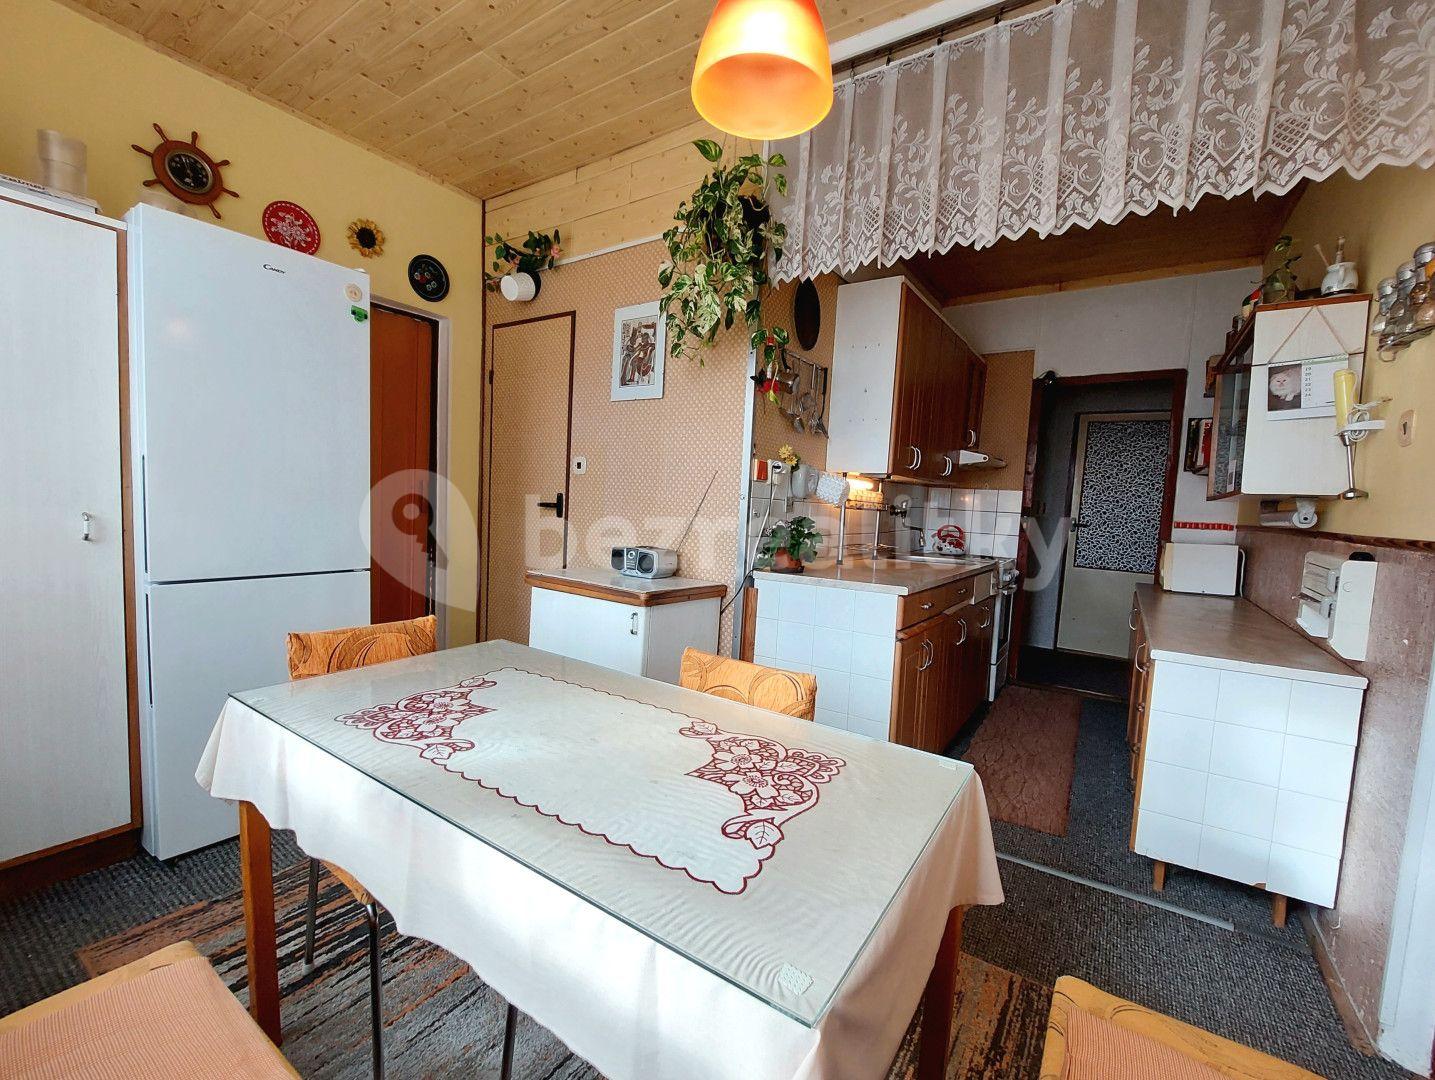 3 bedroom flat for sale, 72 m², Husova, Kadaň, Ústecký Region